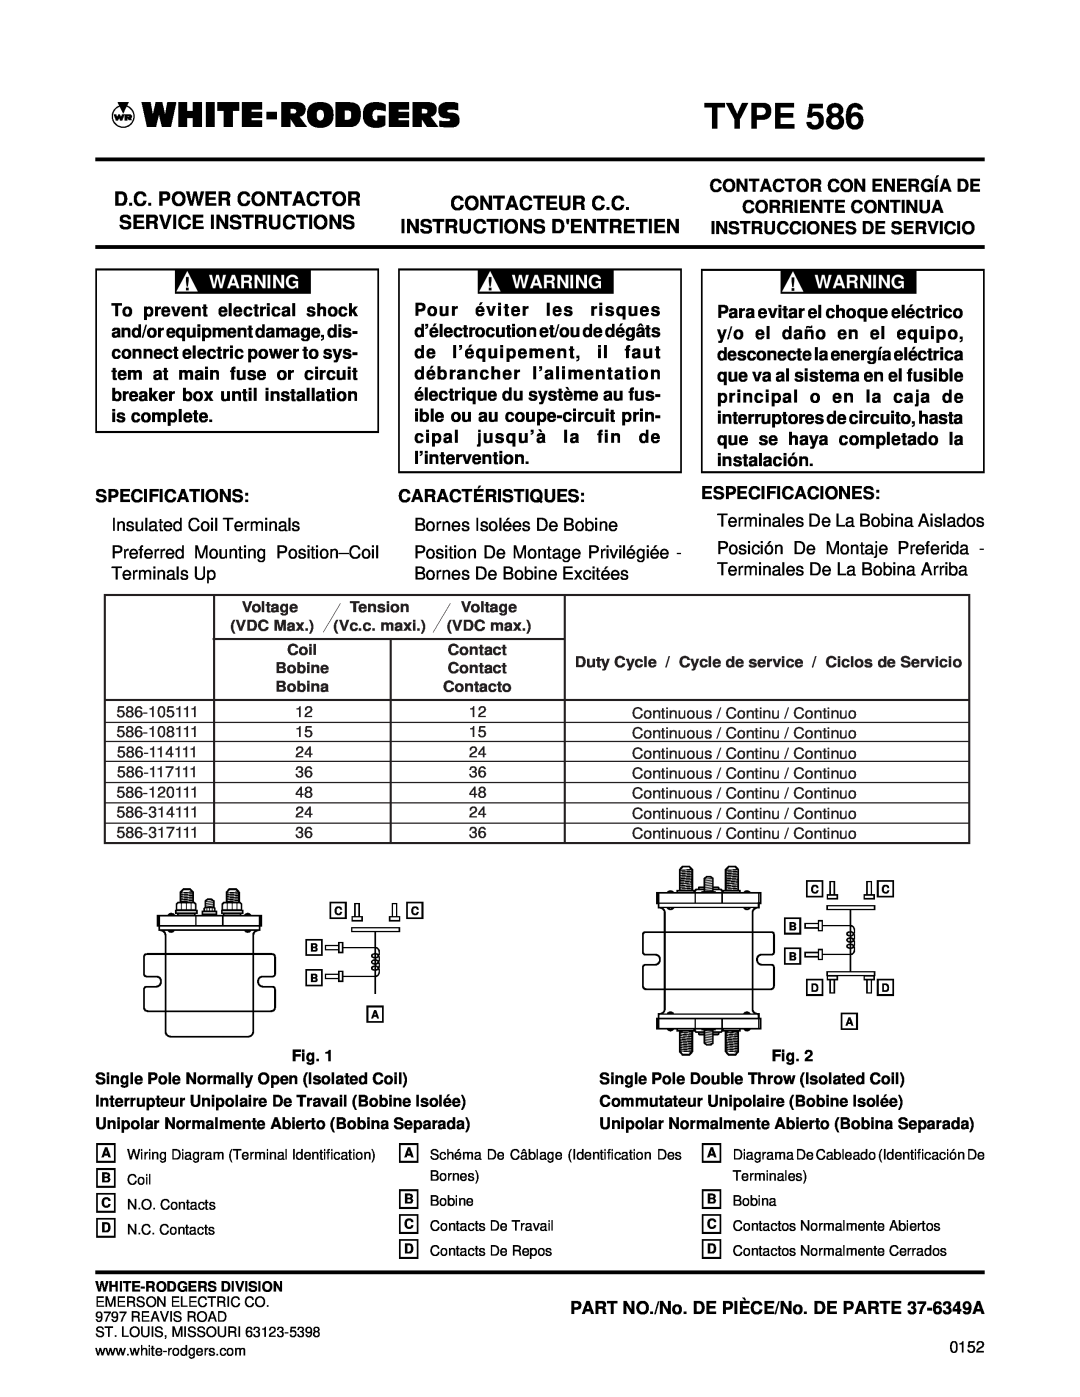 White Rodgers 37-6349A specifications Type, D.C. Power Contactor, Contacteur C.C, Service Instructions, Corriente Continua 